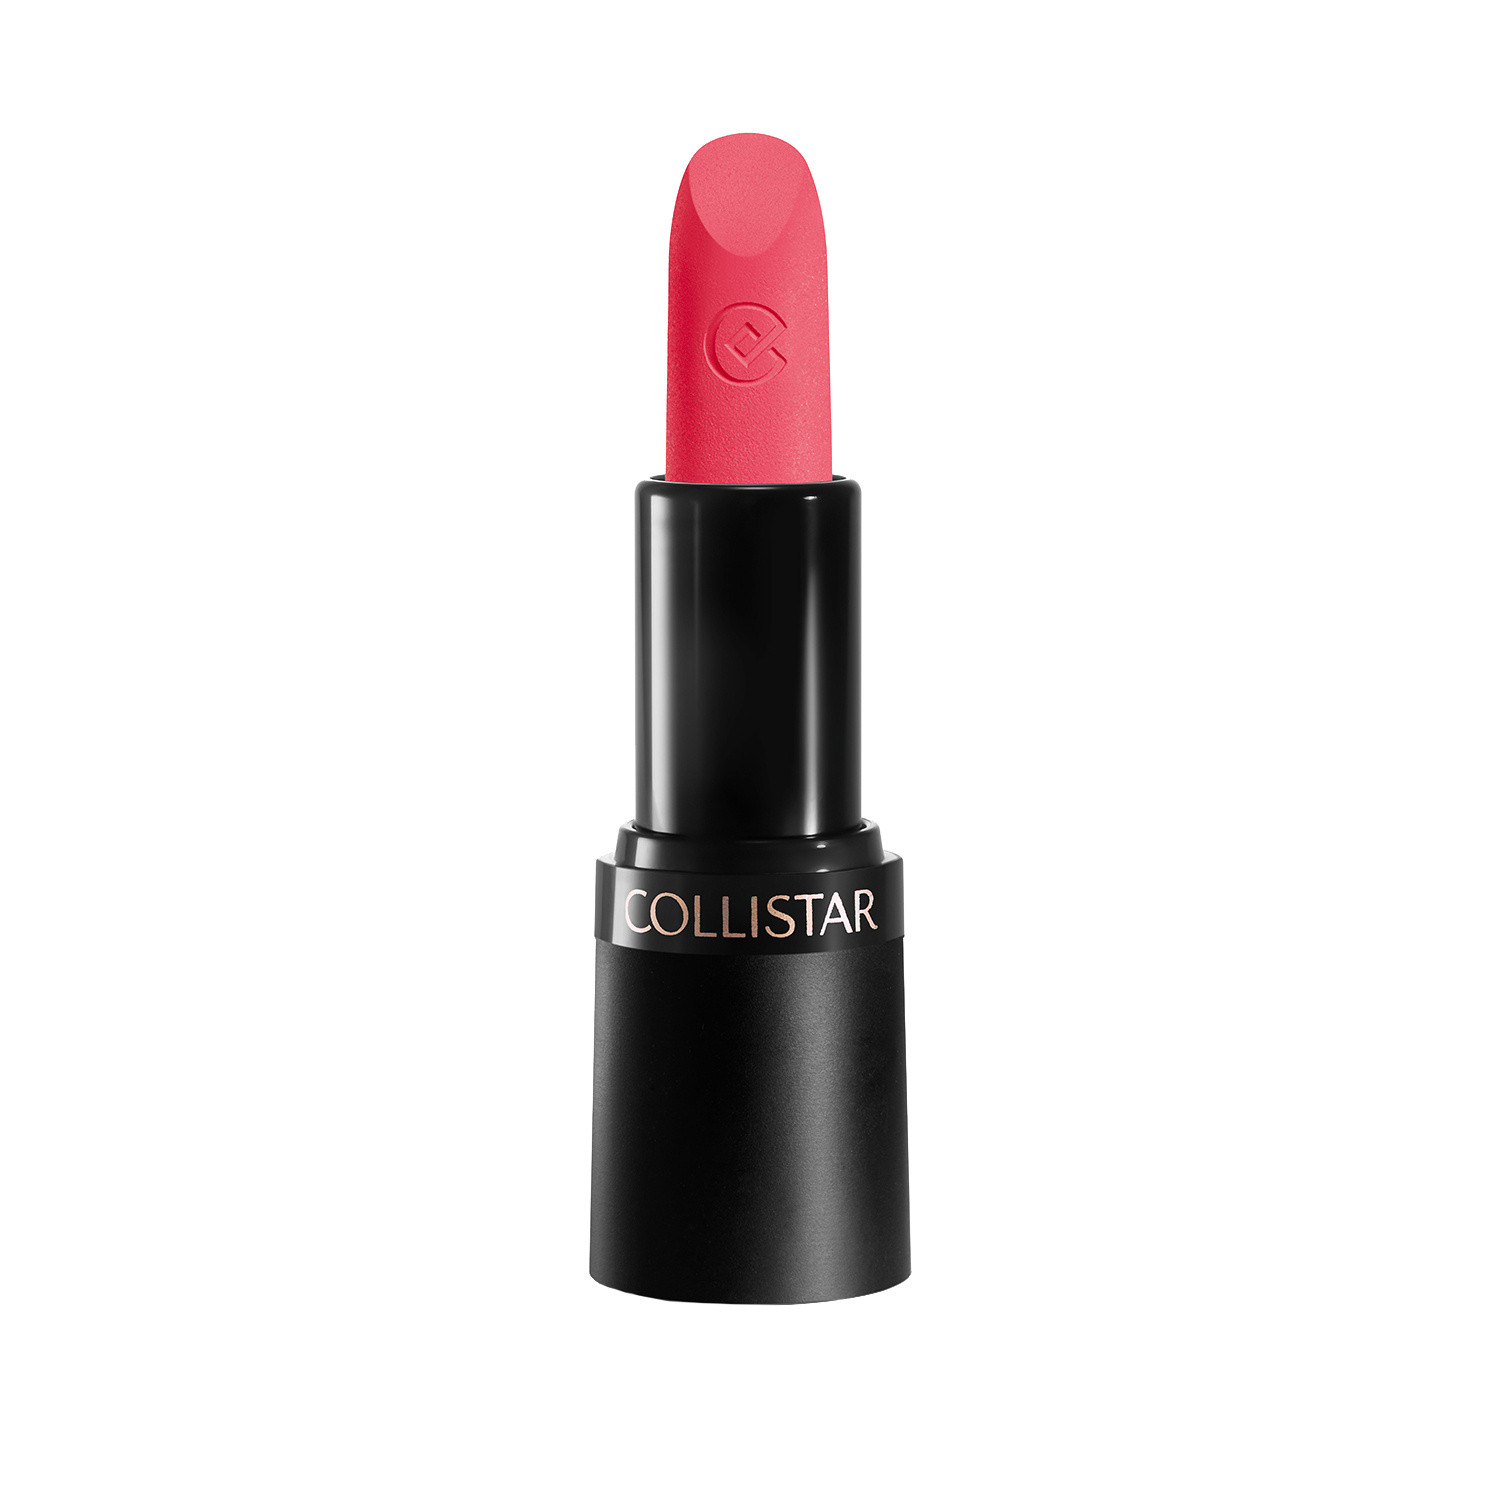 Collistar - Pure matte lipstick - 28 Pink Peach, Orange Fishing, large image number 0